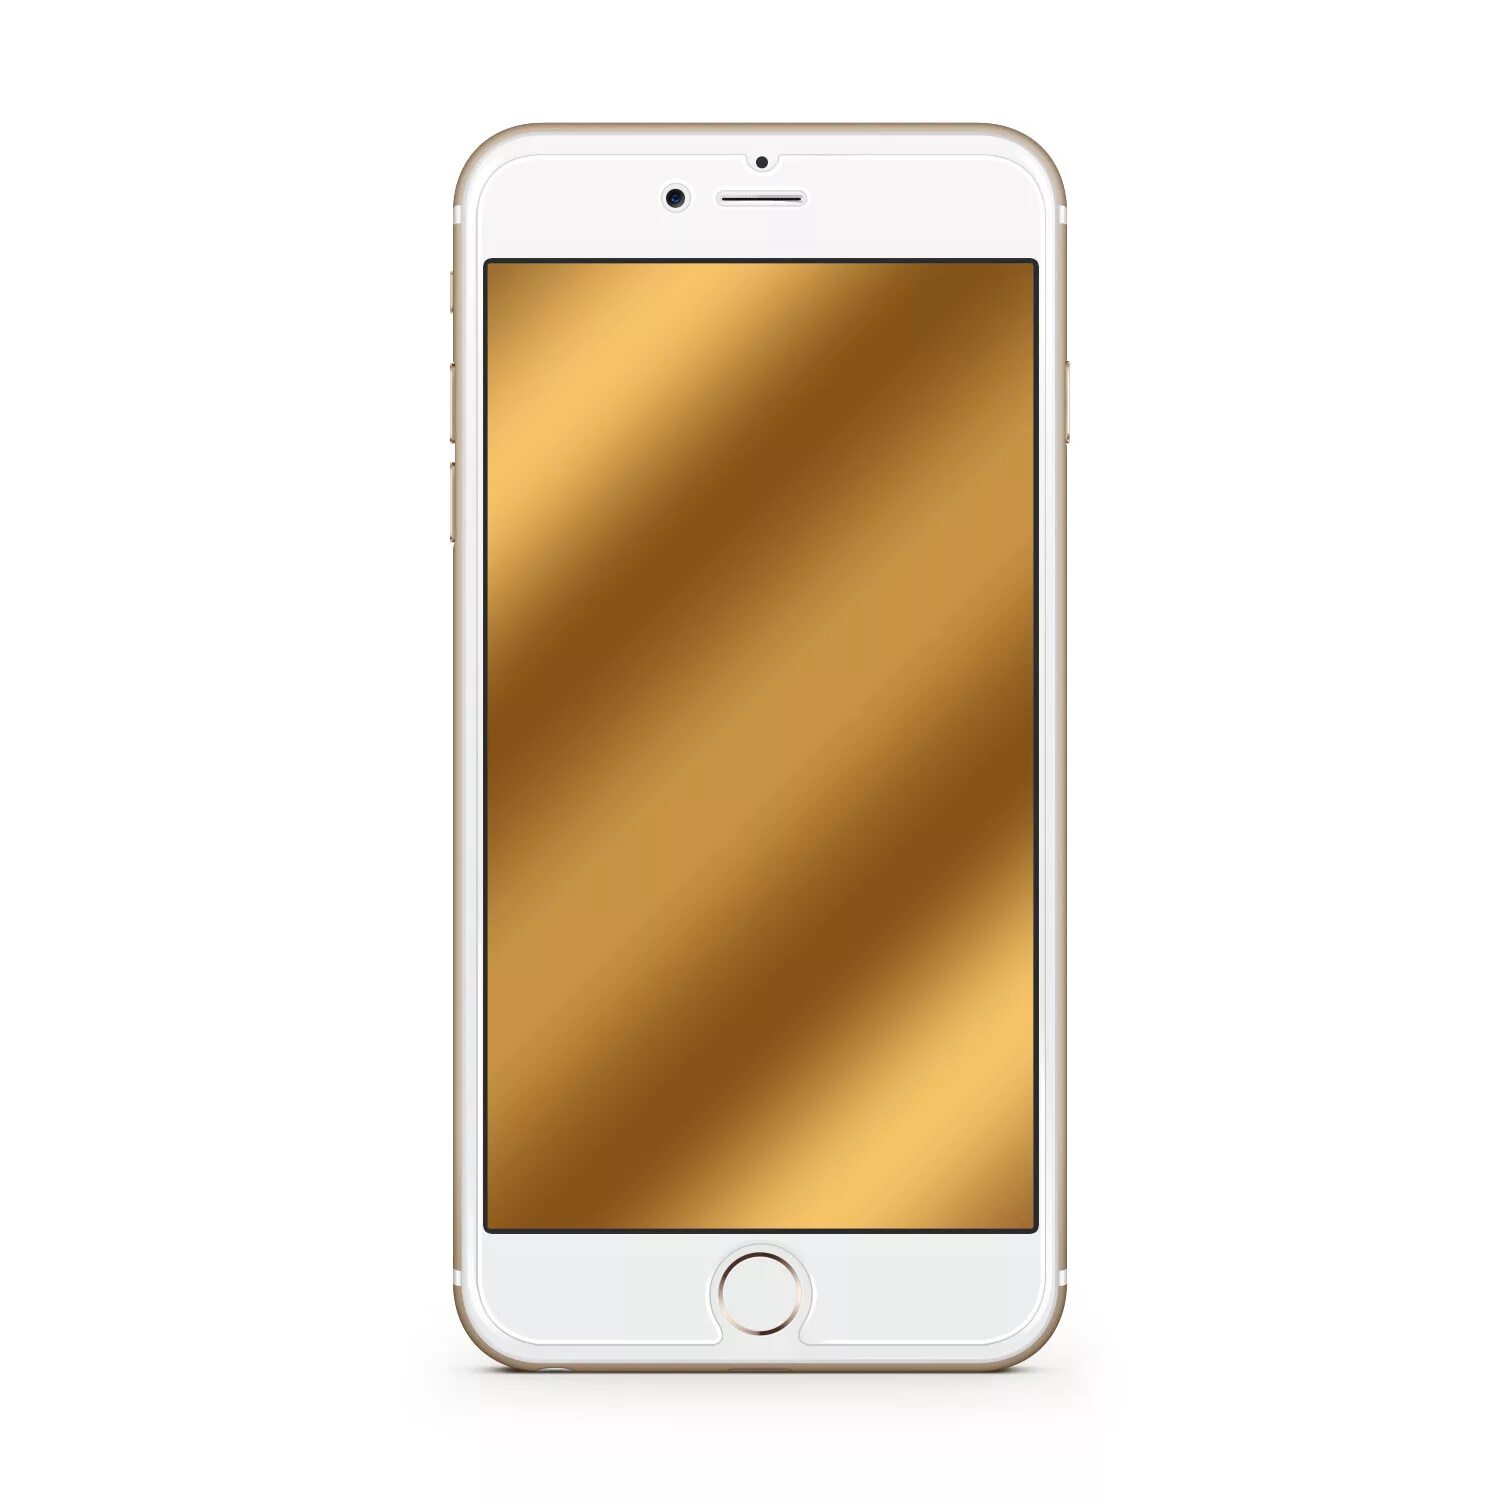 Gold mobile. Iphone 6 Gold. Apple 4s золотой. Айфон без фона. Белый смартфон на прозрачном фоне.